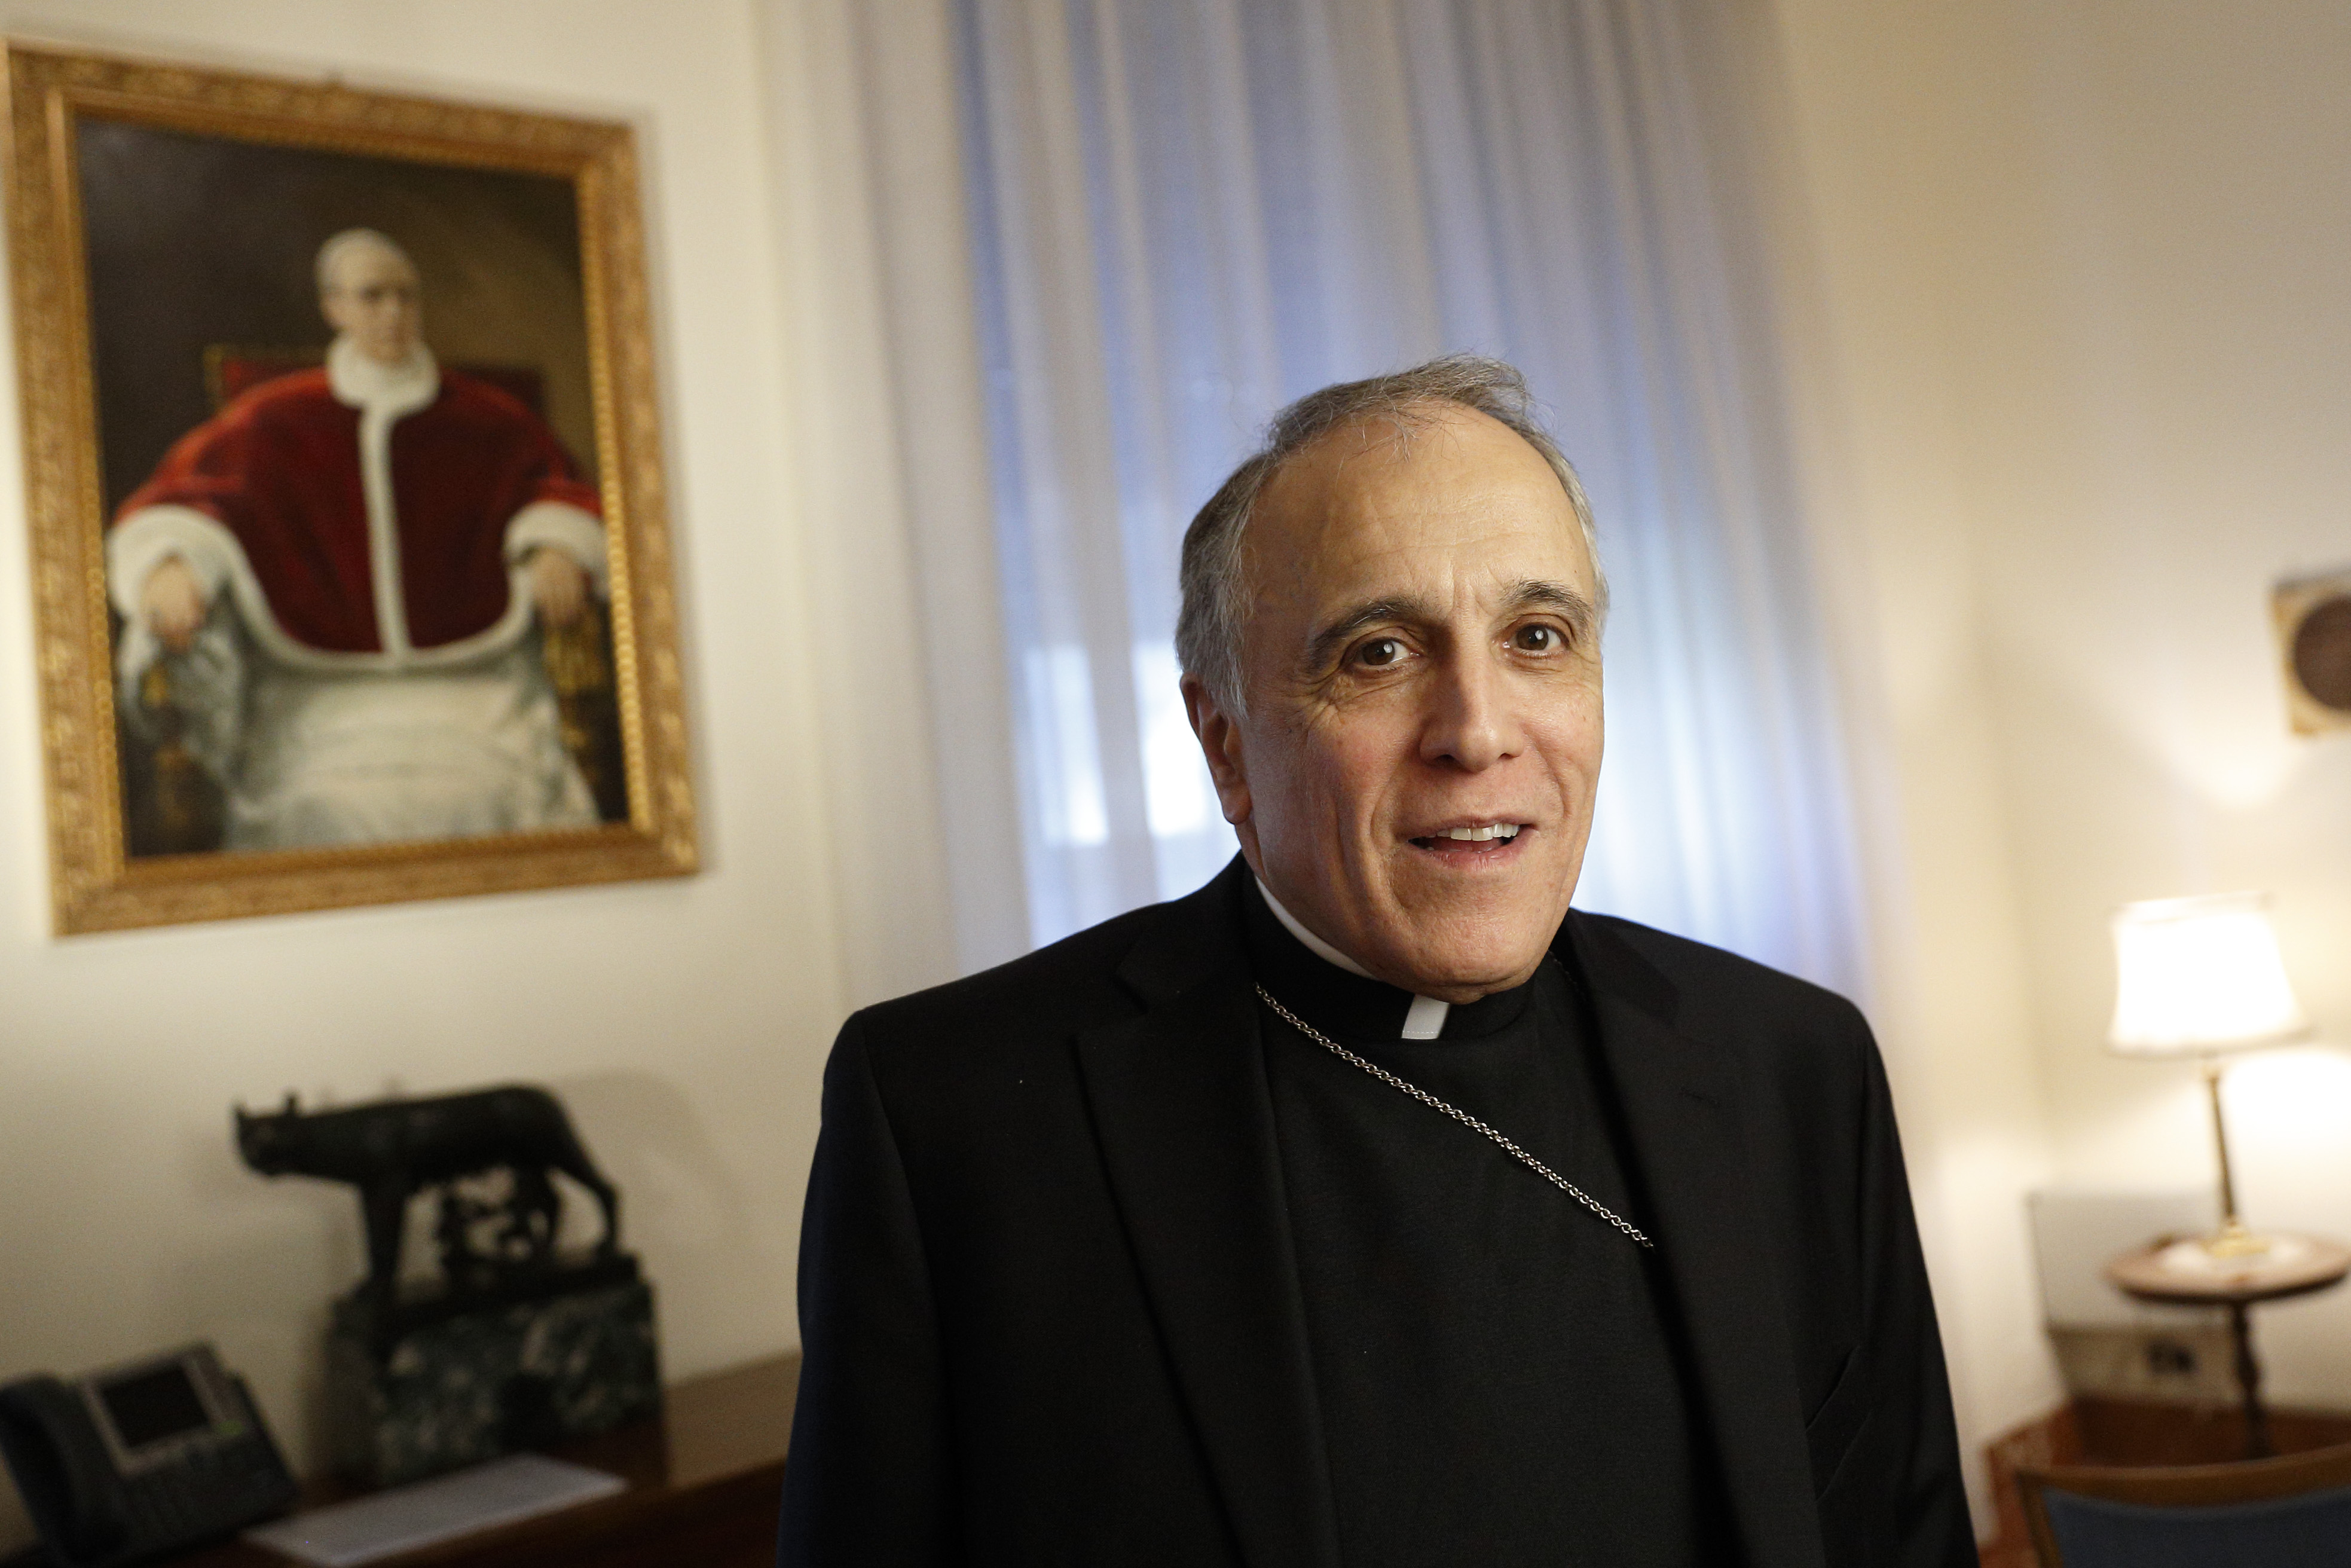 Cardinal DiNardo, USCCB president, 'resting comfortably' after suffering mild stroke